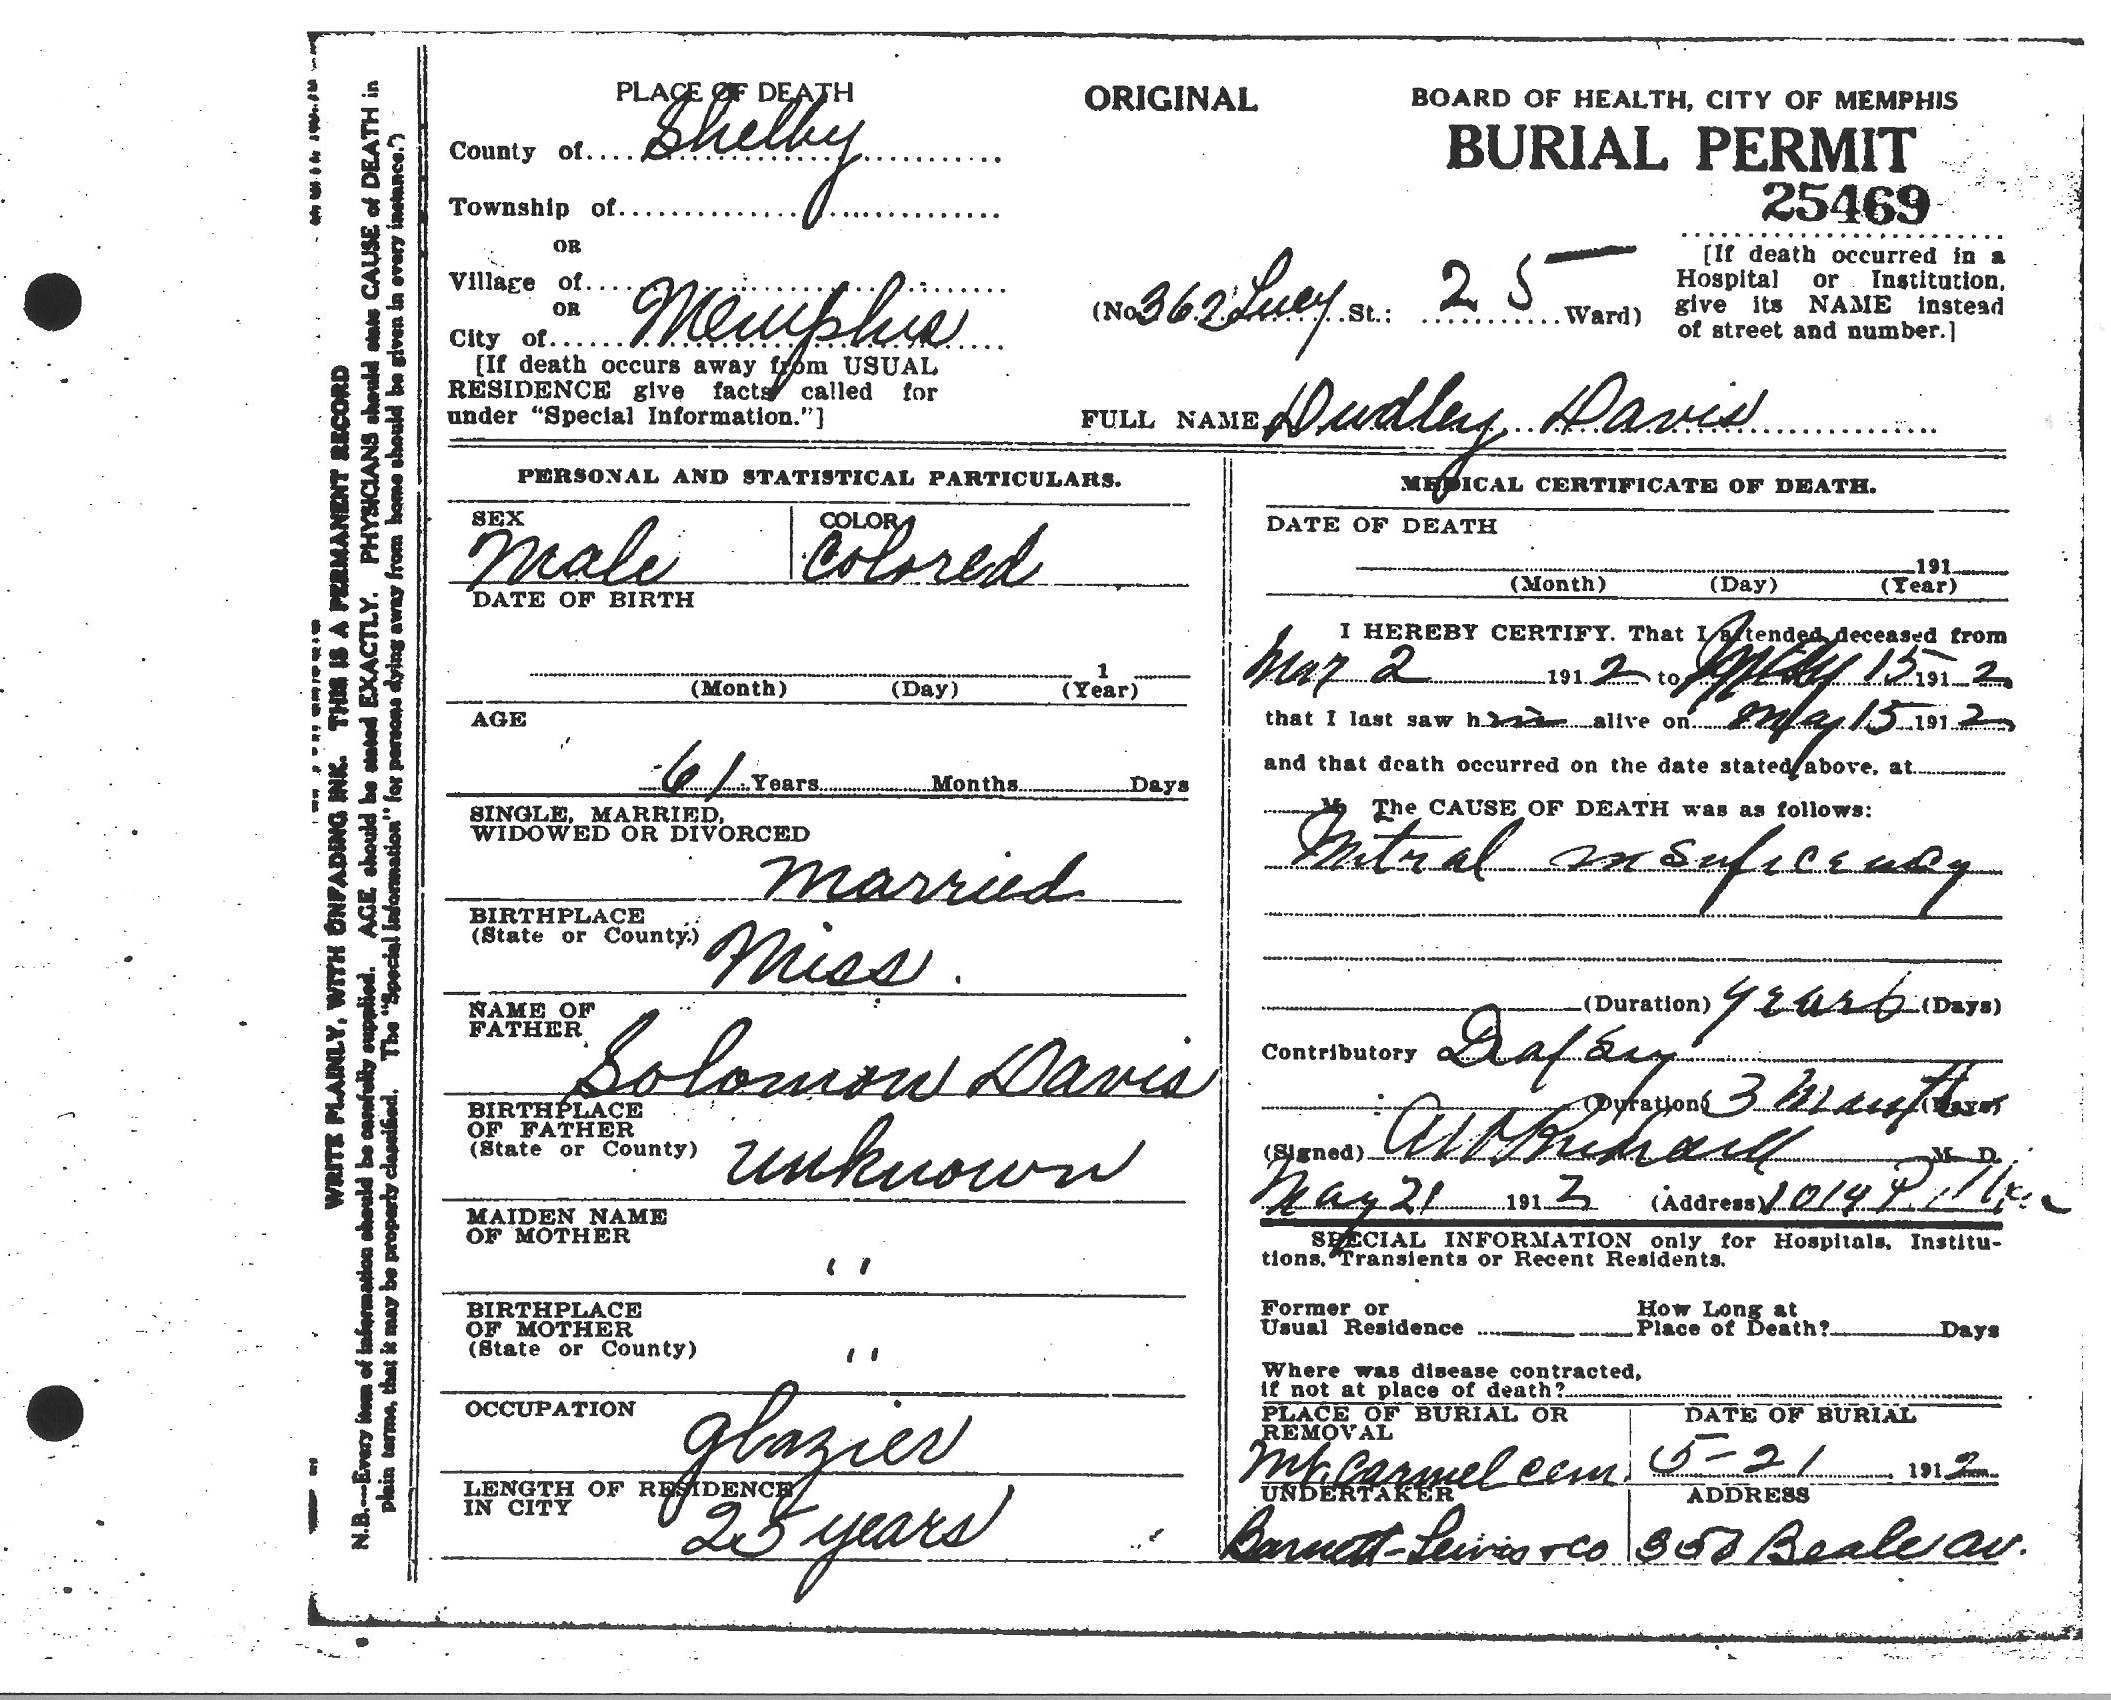 Dudley Davis' Death Certificate